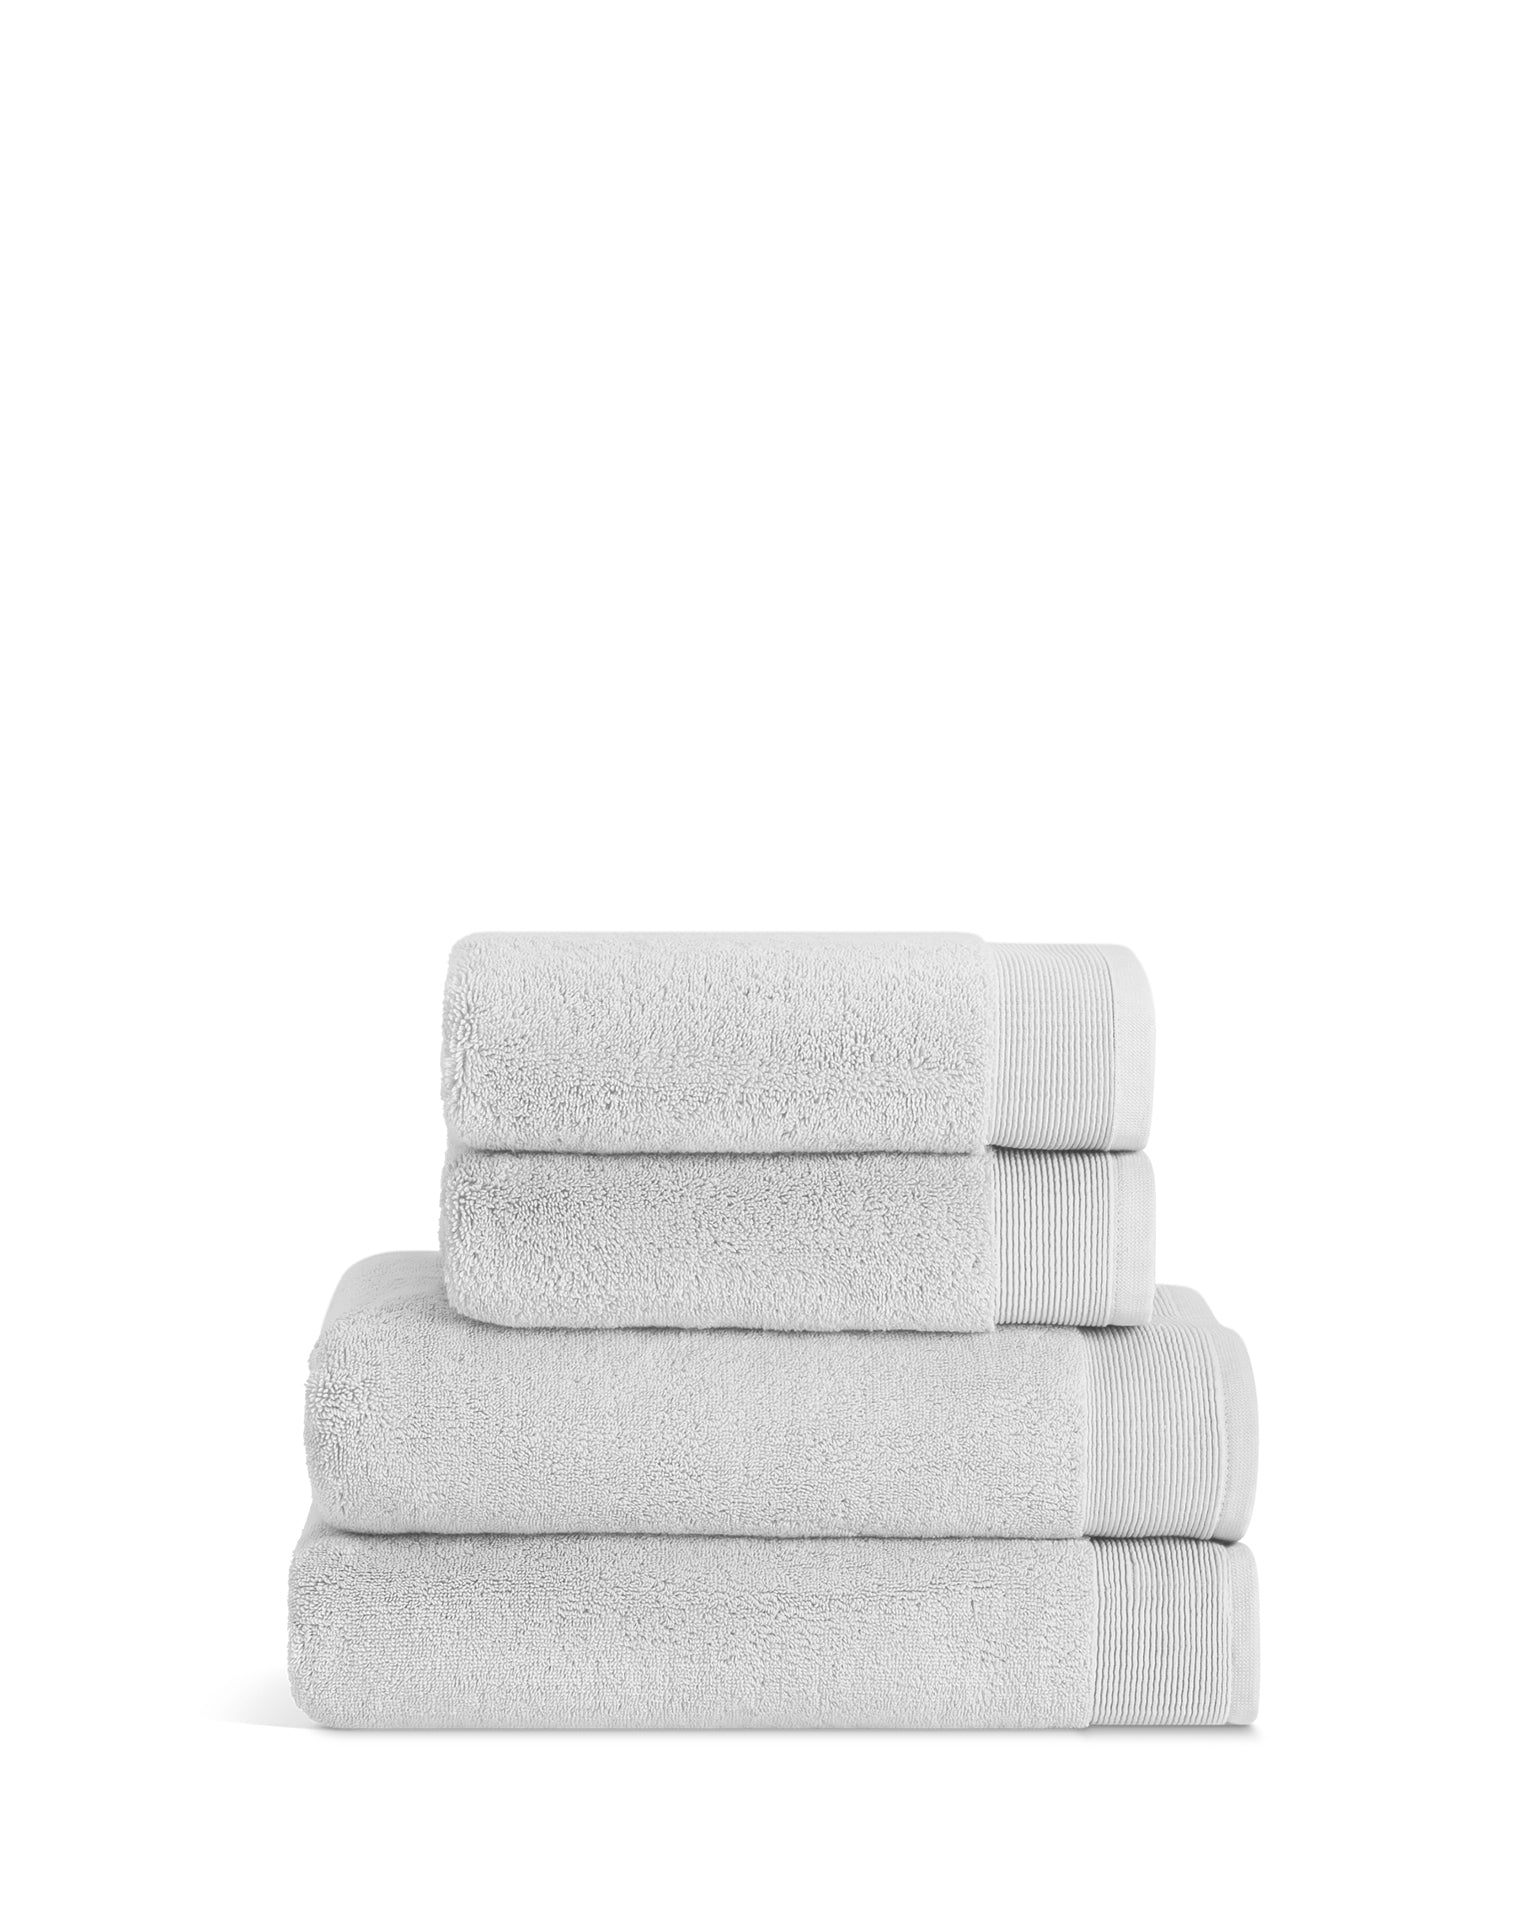 Onsen Plush Bath Towel Set - Luxury, Ultra-Fluffy Bath & Hand Towels, 100% Turkish-Grown Aegean Cotton, Wovey Collection, Fog